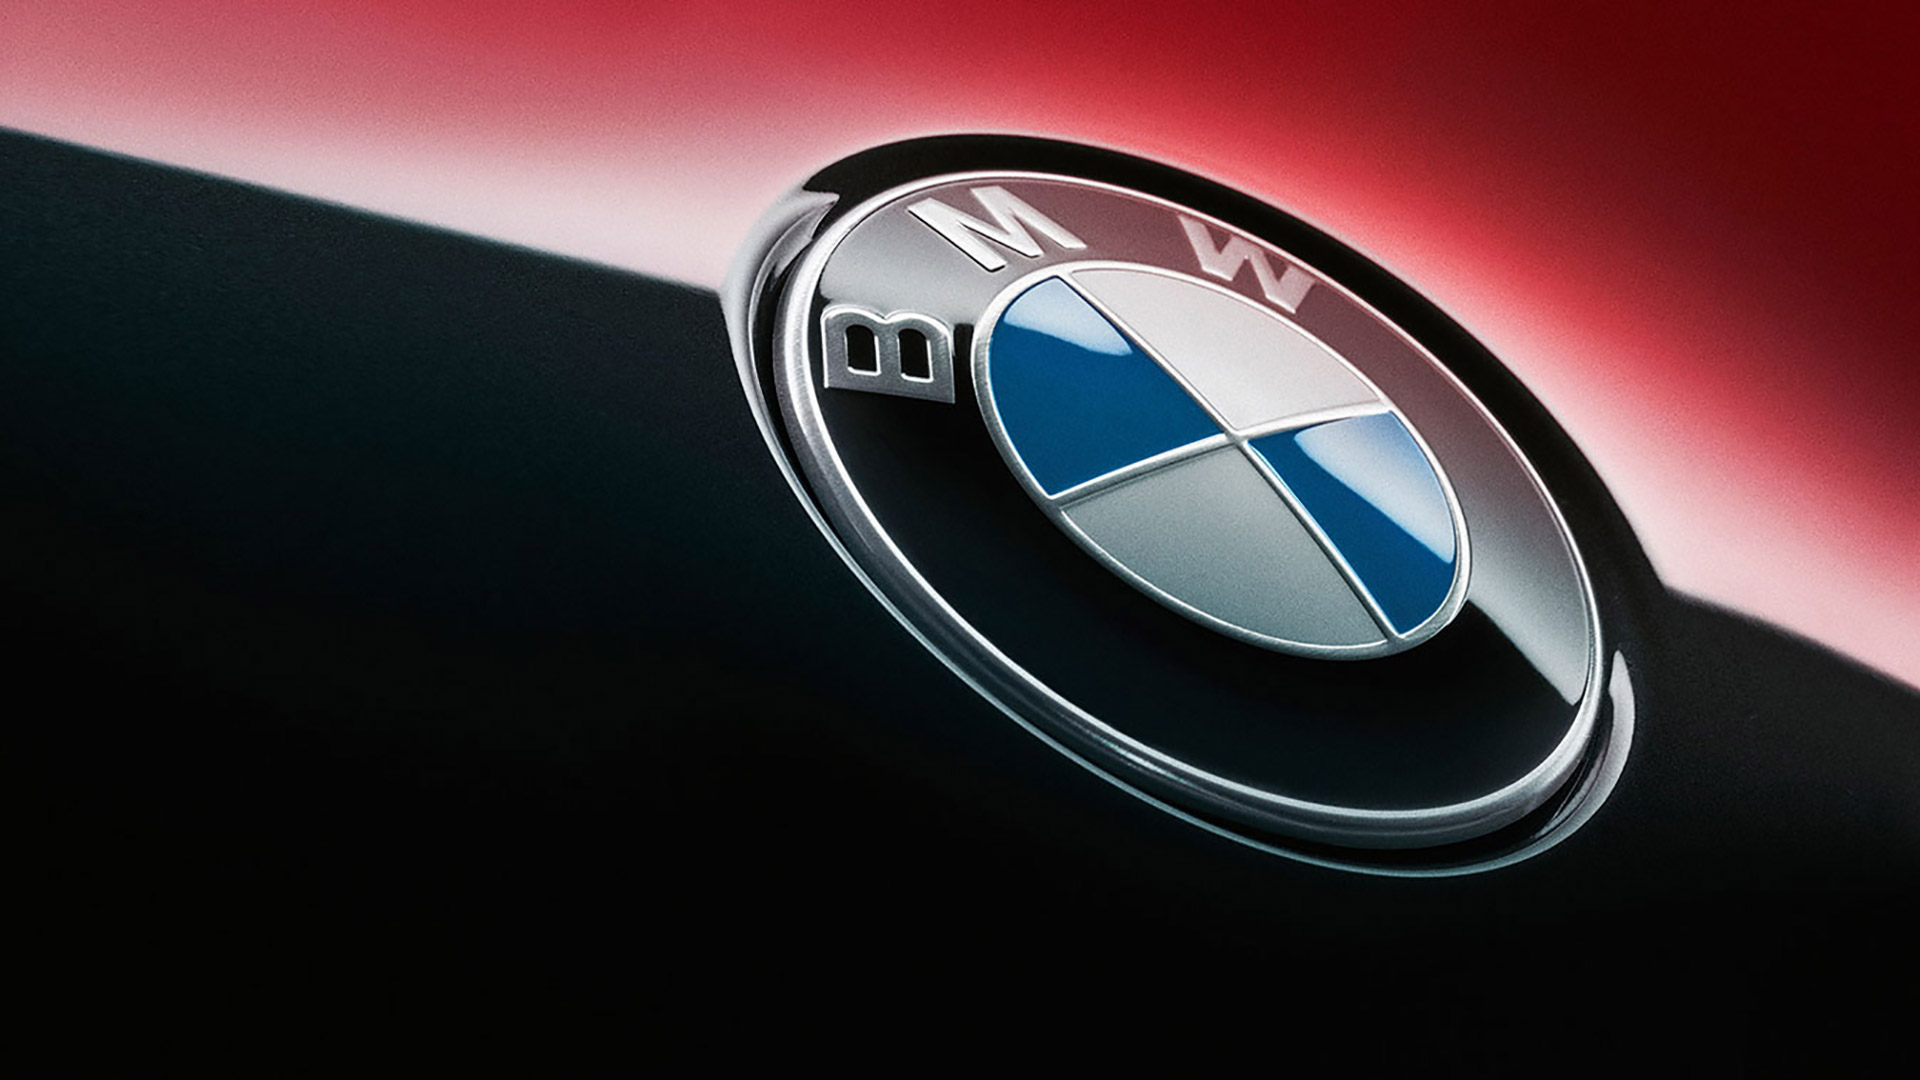 2019 q3 auc offer 1920x1080 - فروش نقدی و اعتباری محصولات BMW توسط پرشیا خودرو